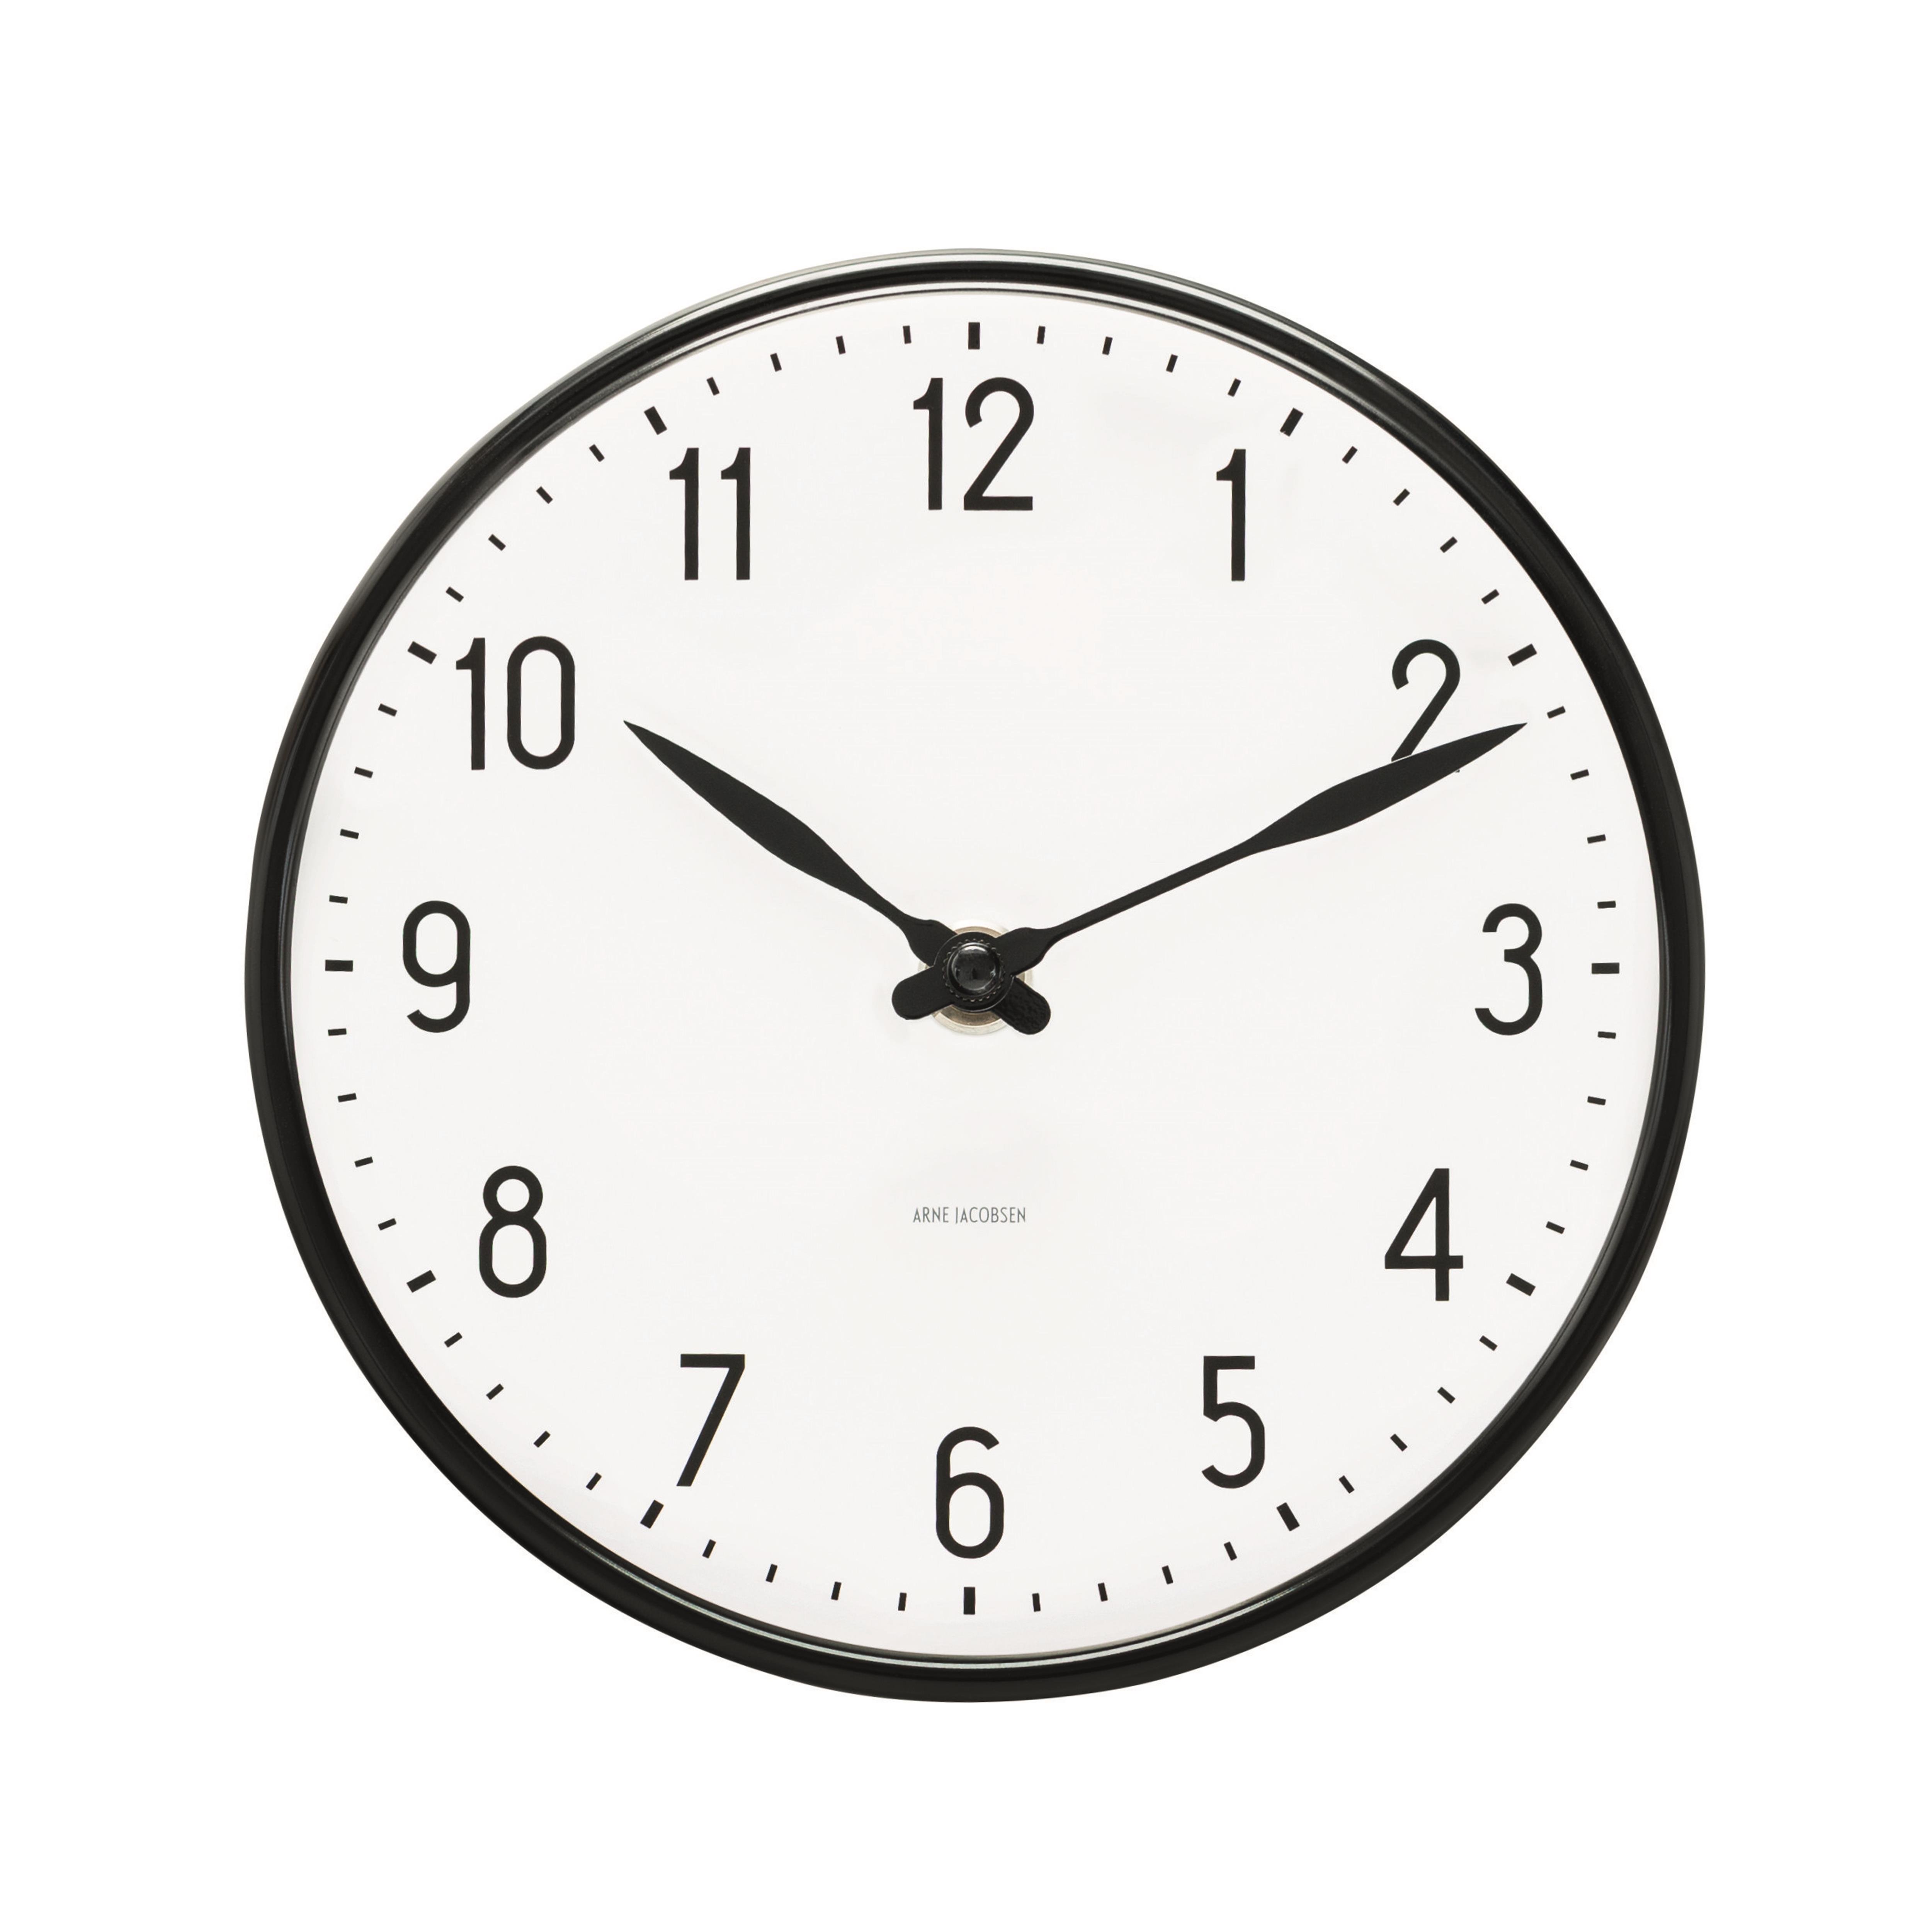 Arne Jacobsen - Stylish table and wall clocks